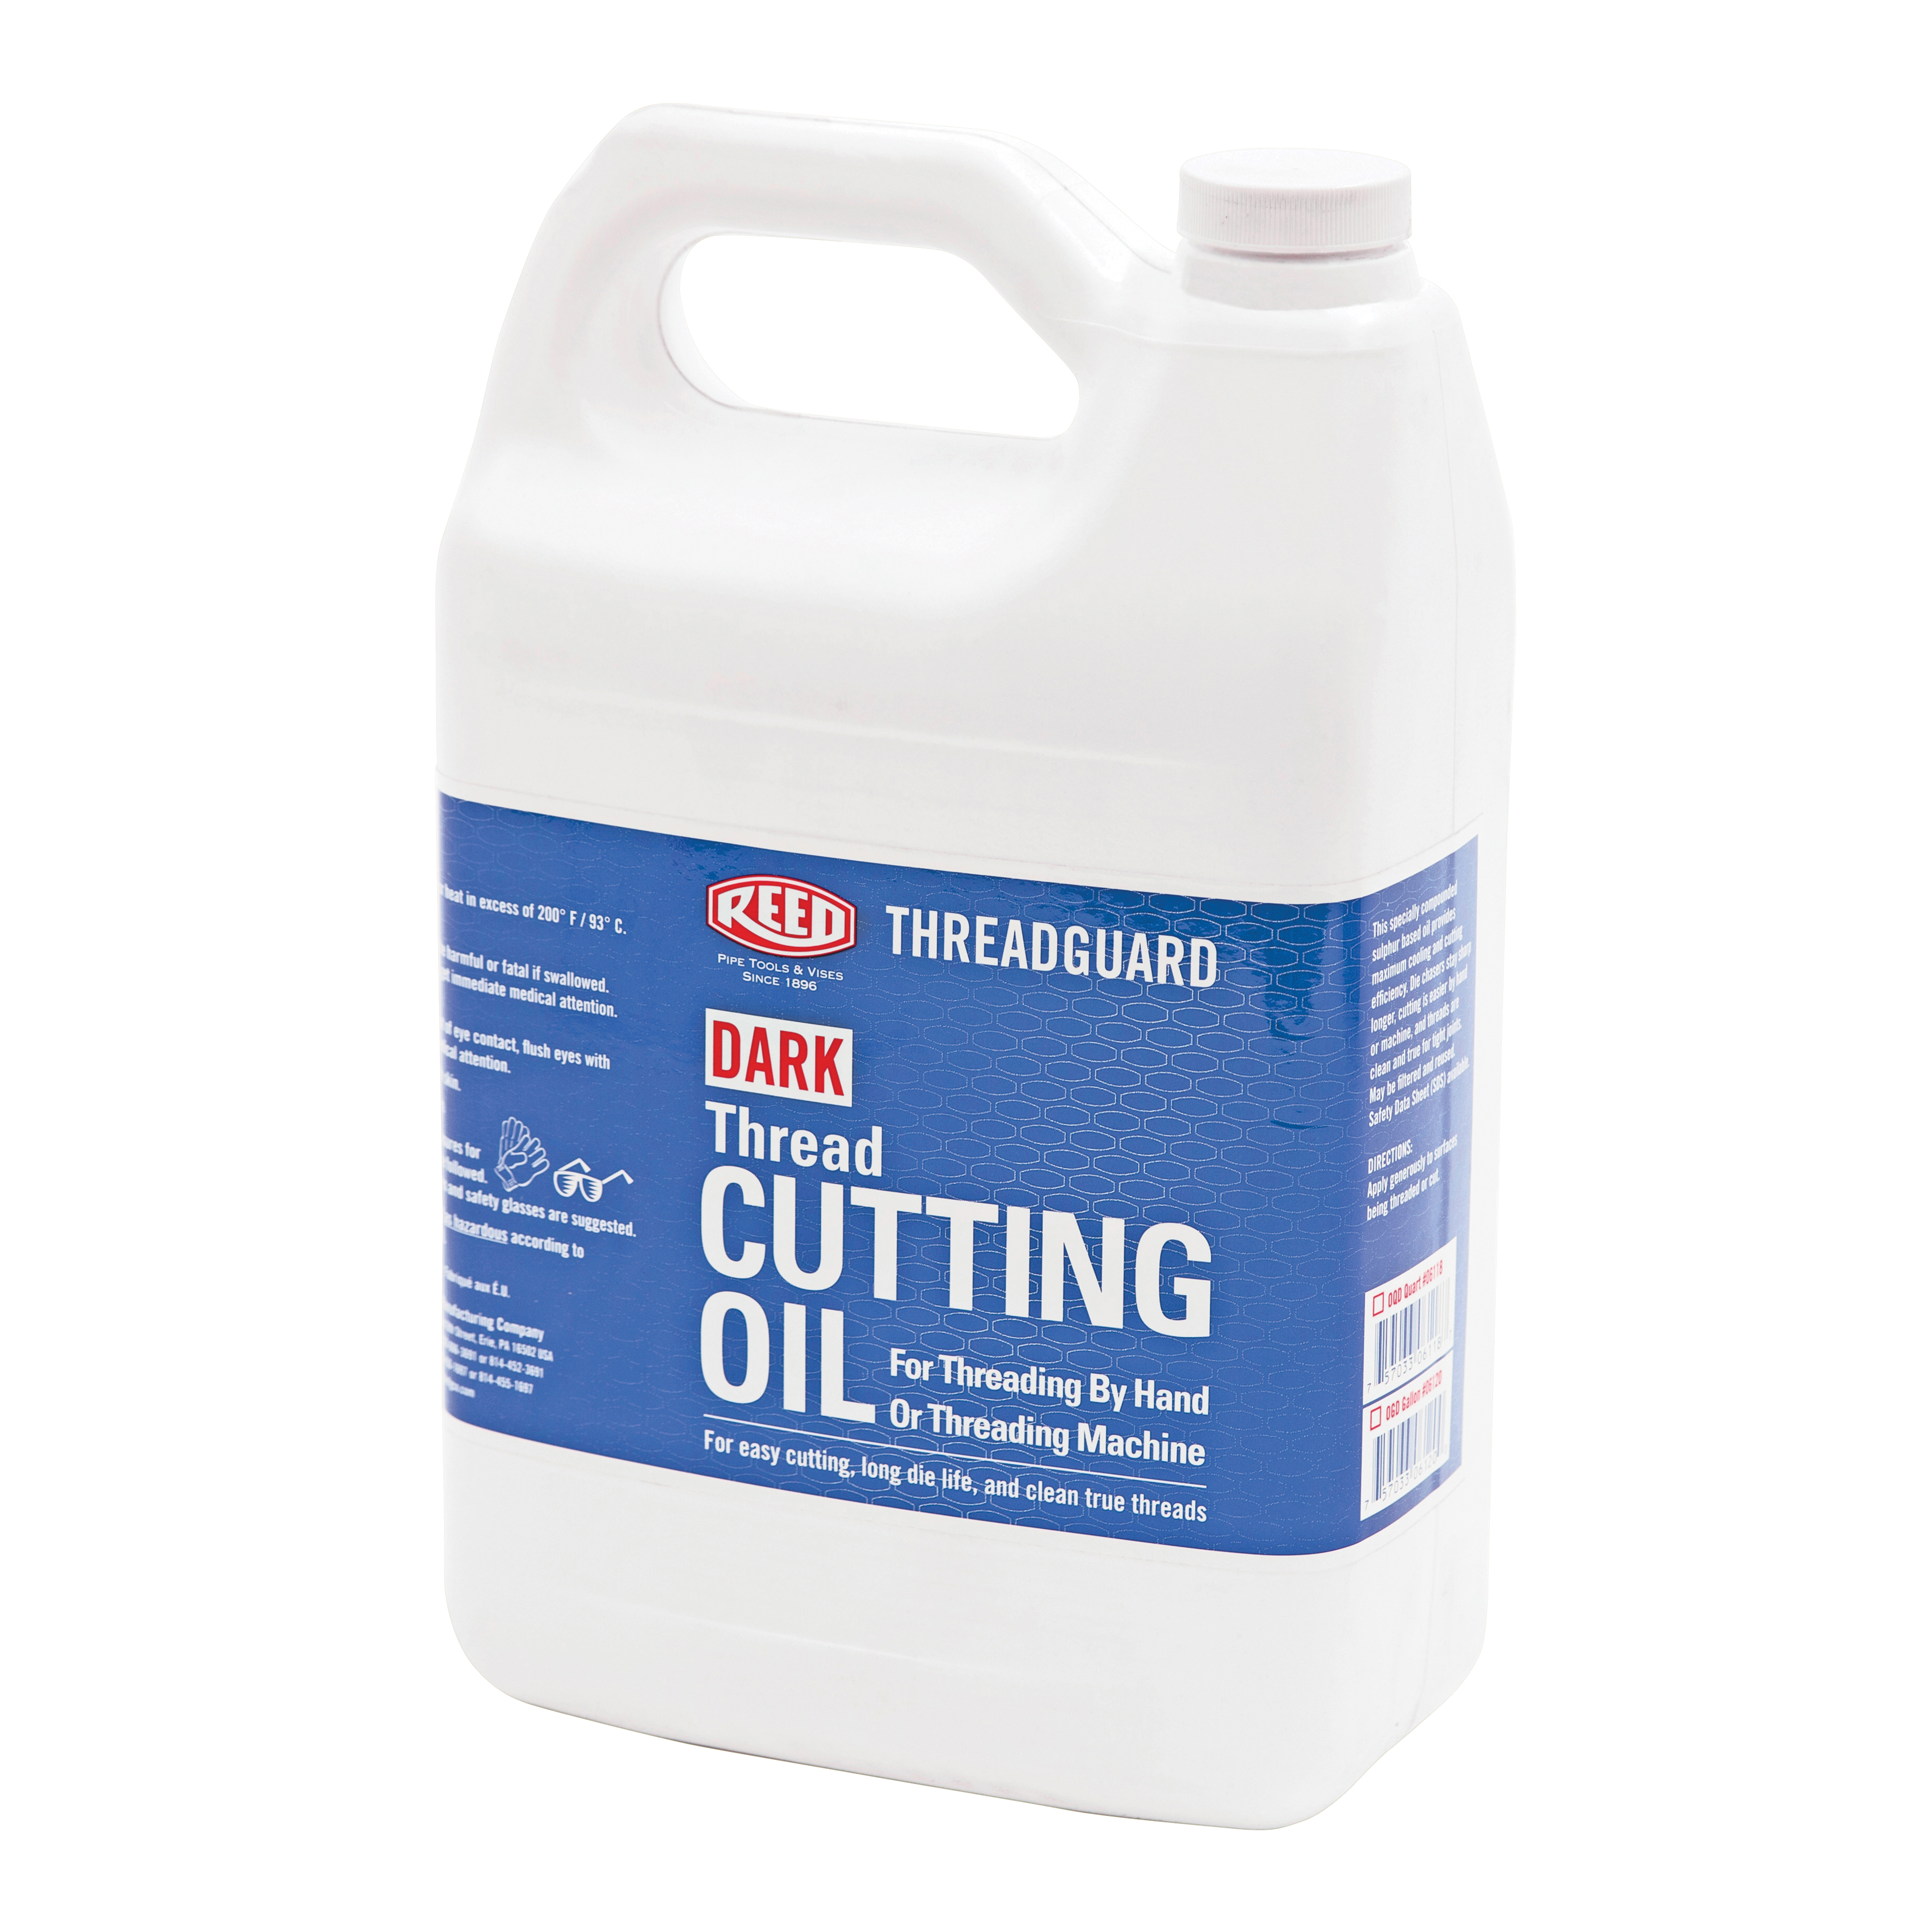 Reed Threadguard 06120 Dark Cutting Oil, 1 gal Bottle Container, Petroleum, Liquid, Amber